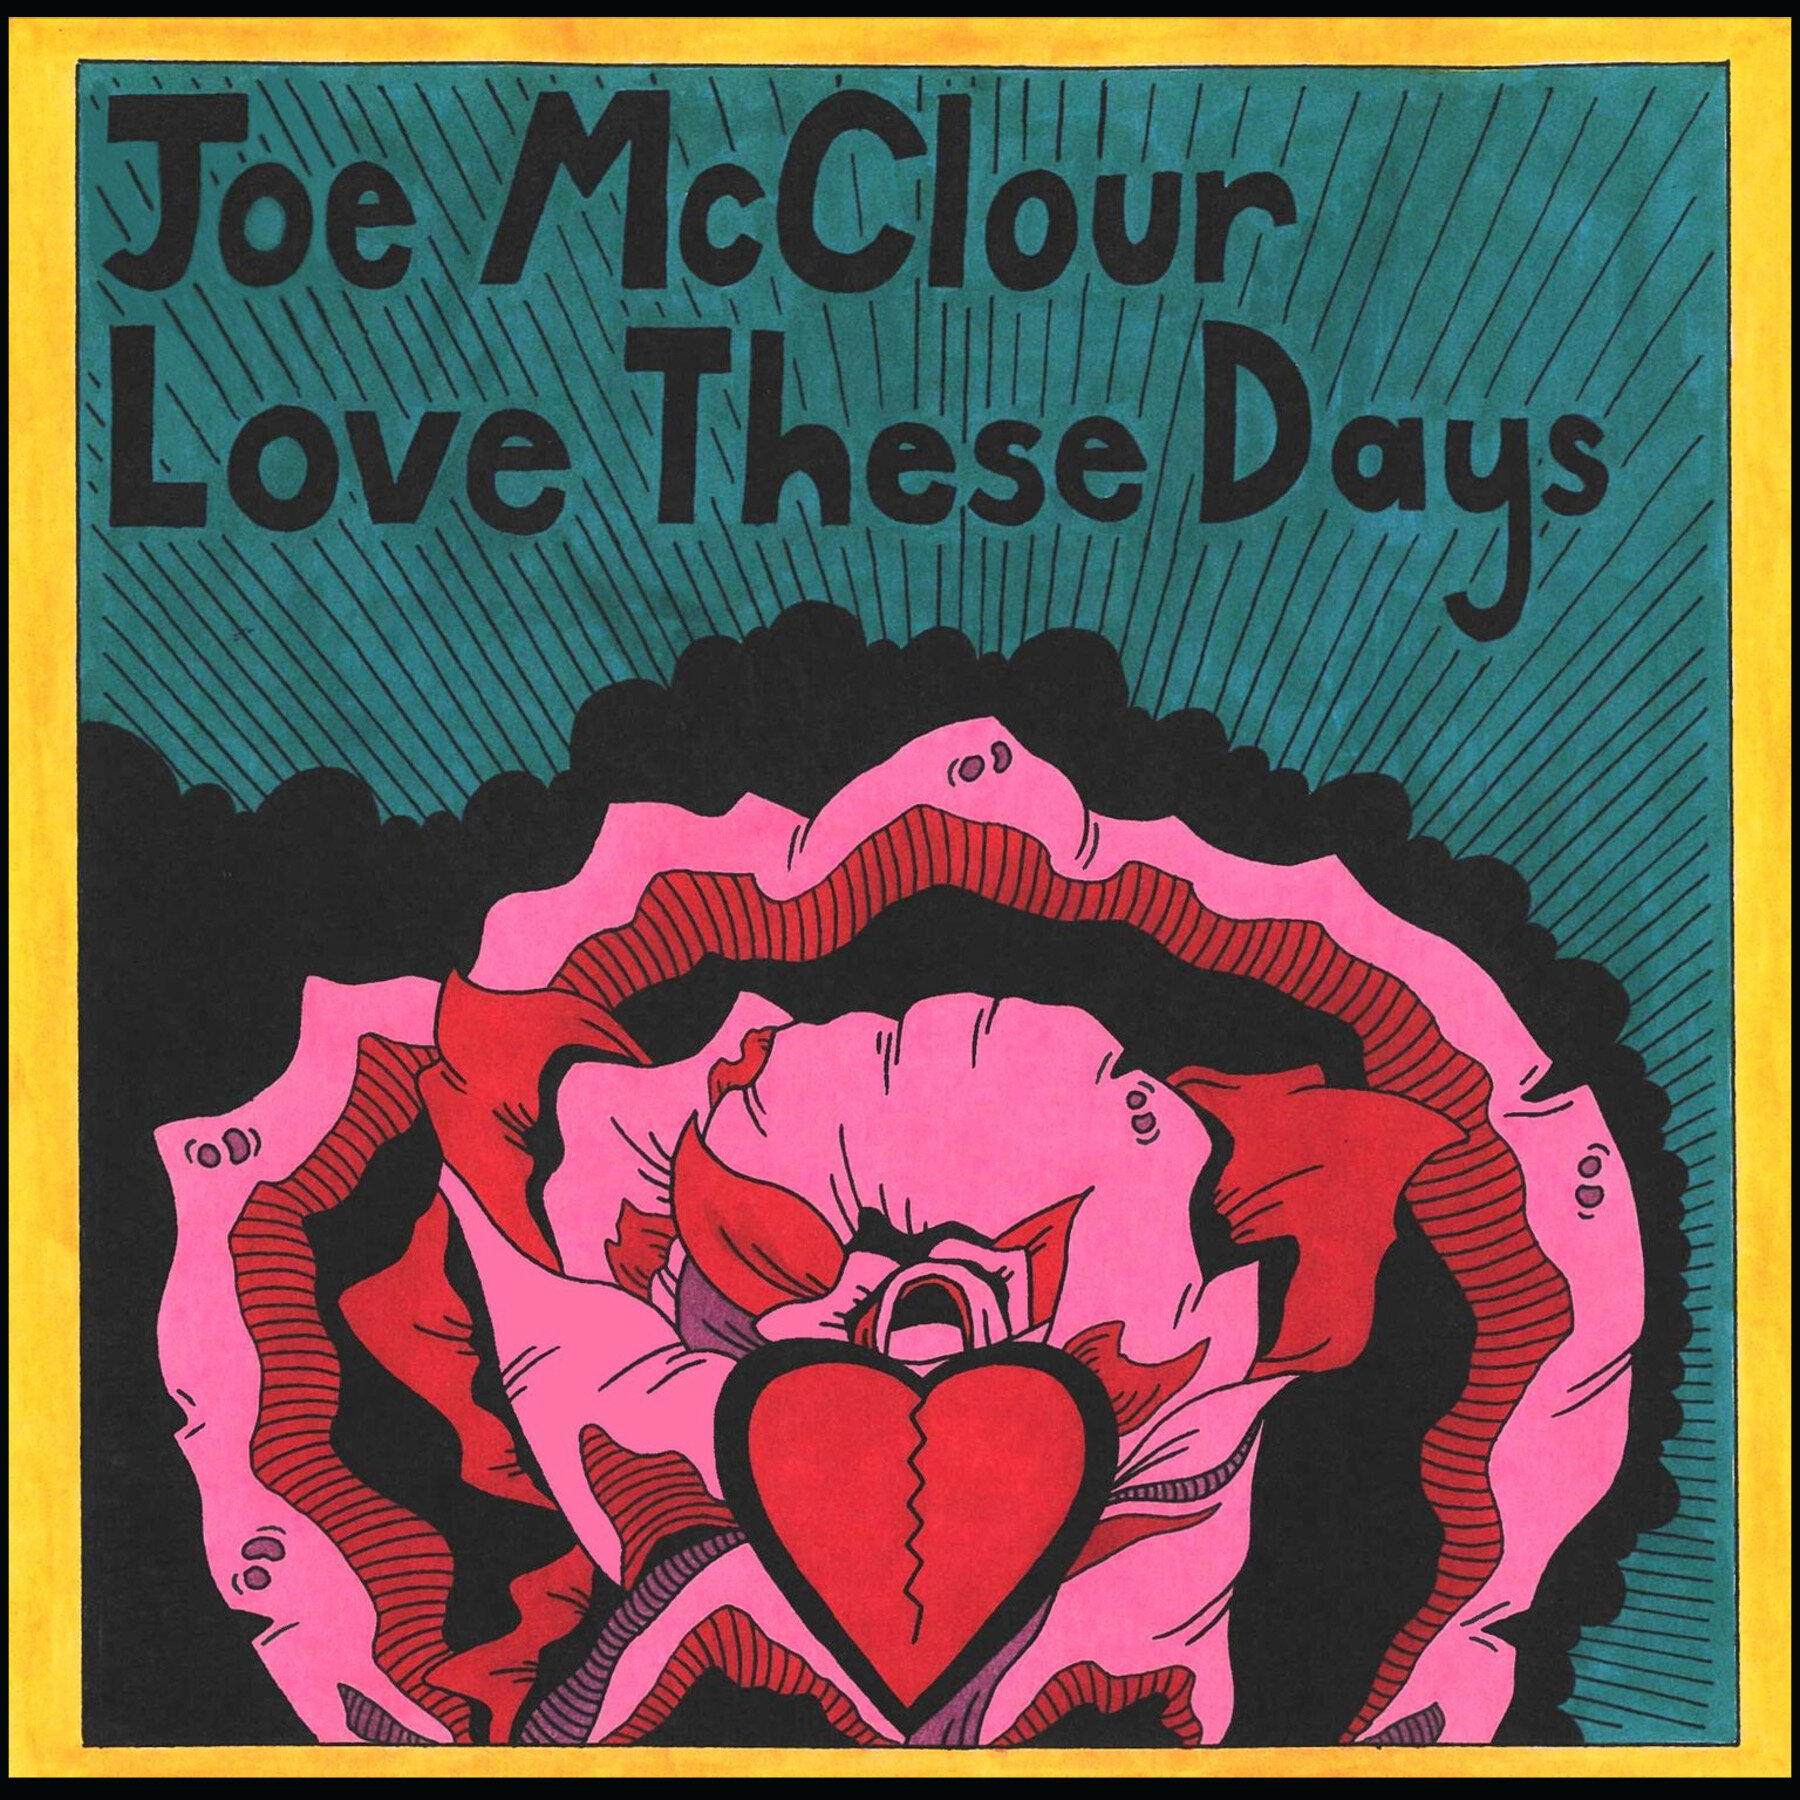  Joe McClour “Love These Days” Single Cover 